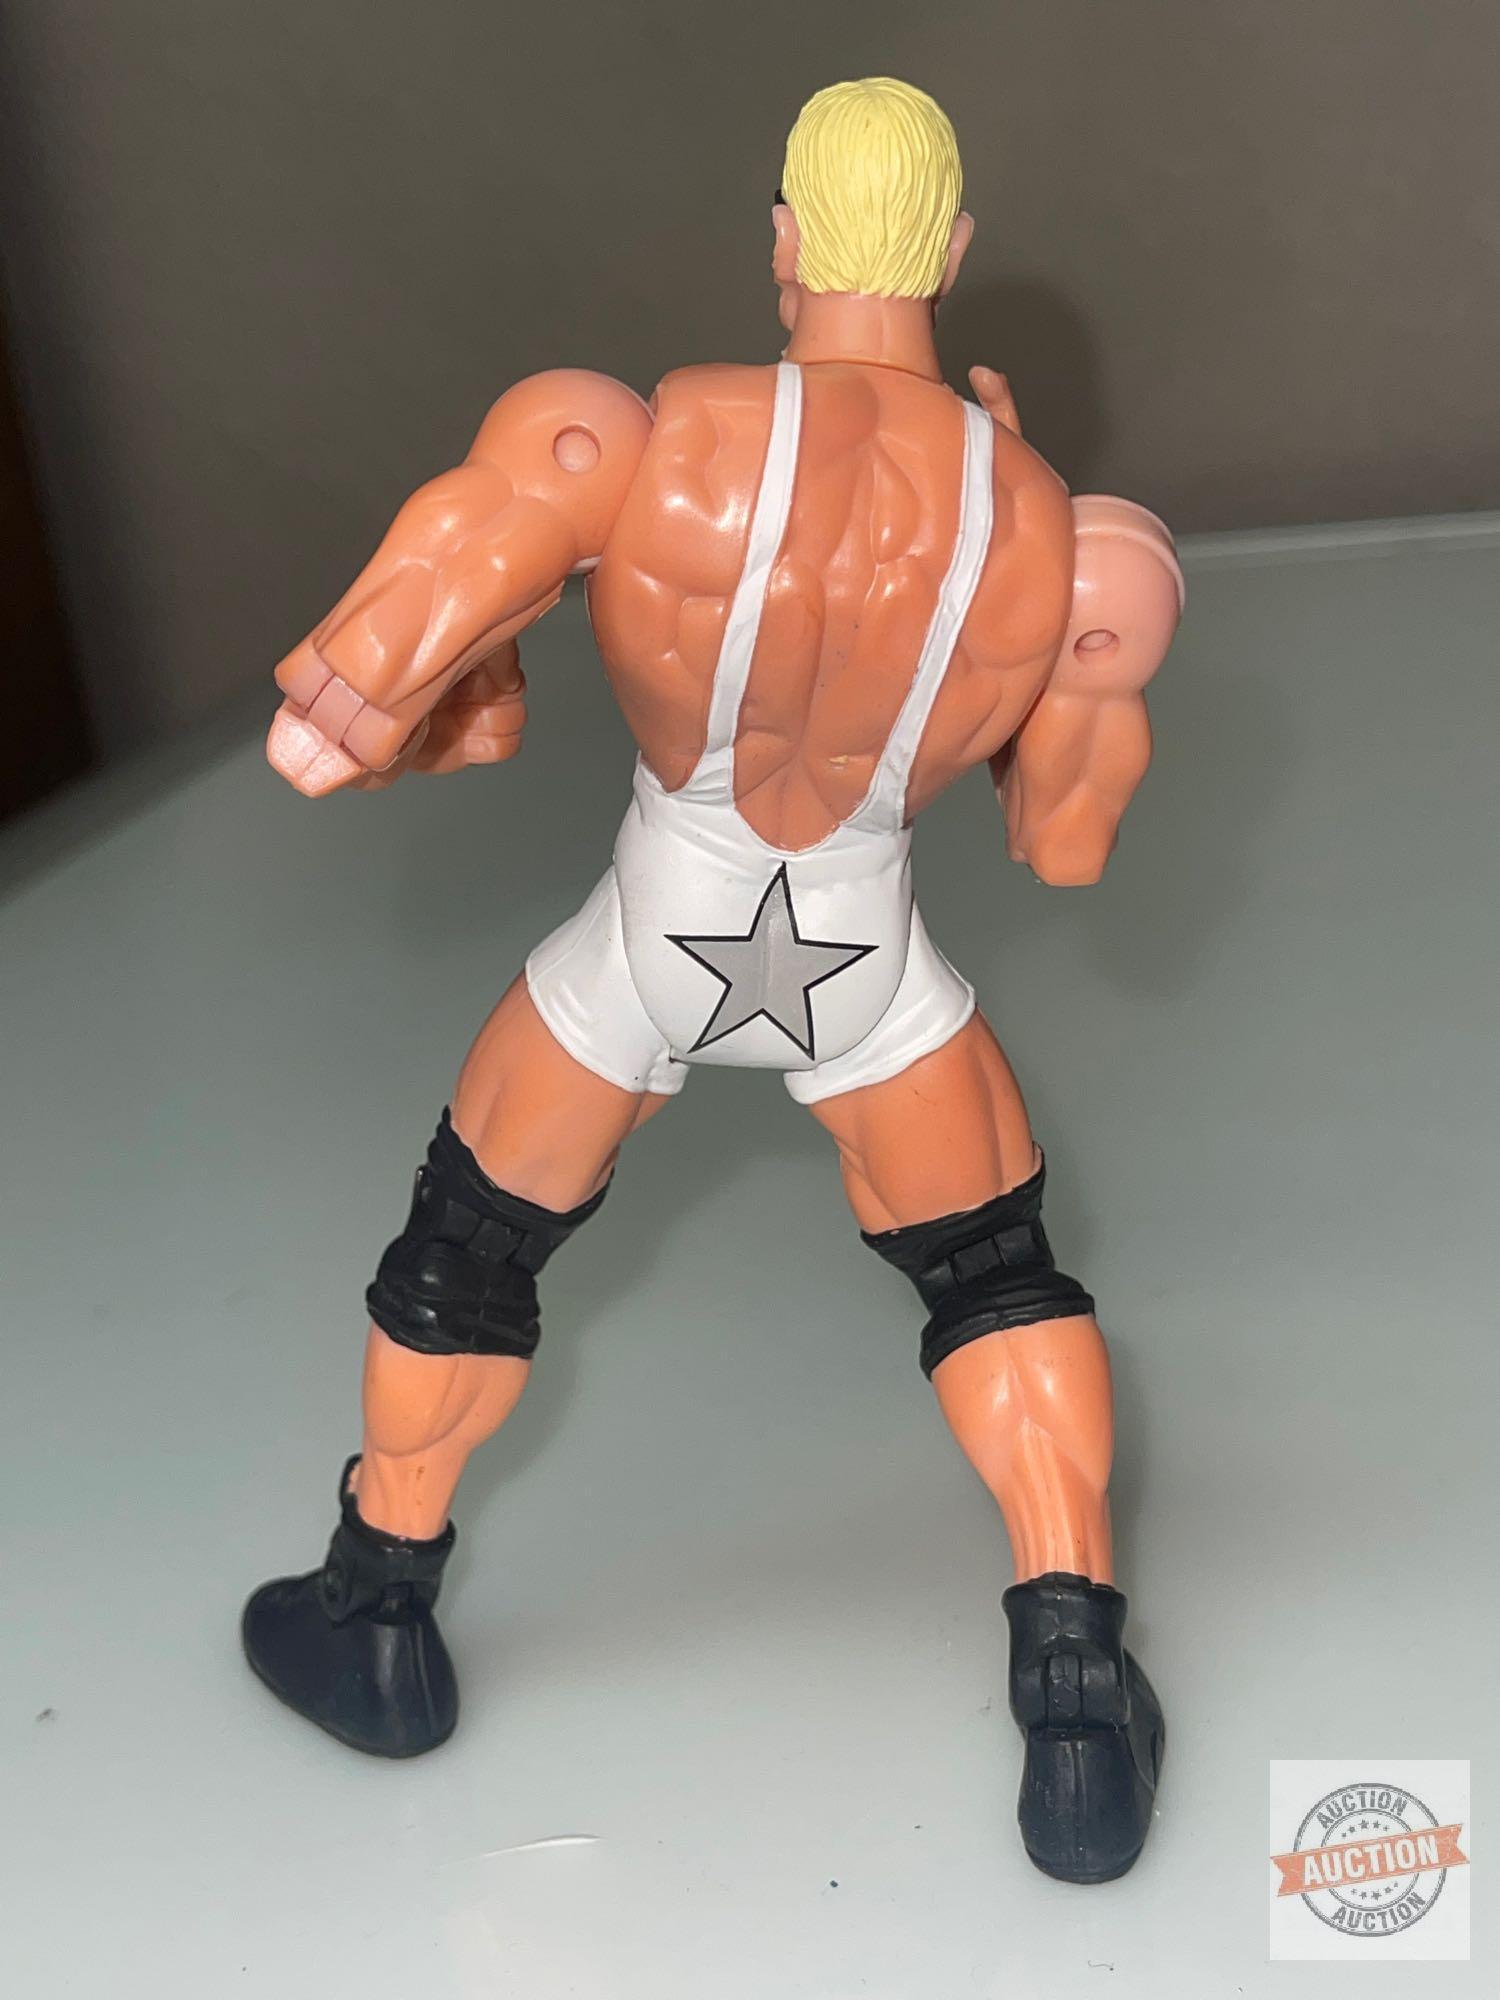 Toys - WWF 4 Wrestling Auction Figures, 1999, 6", 4x's the money